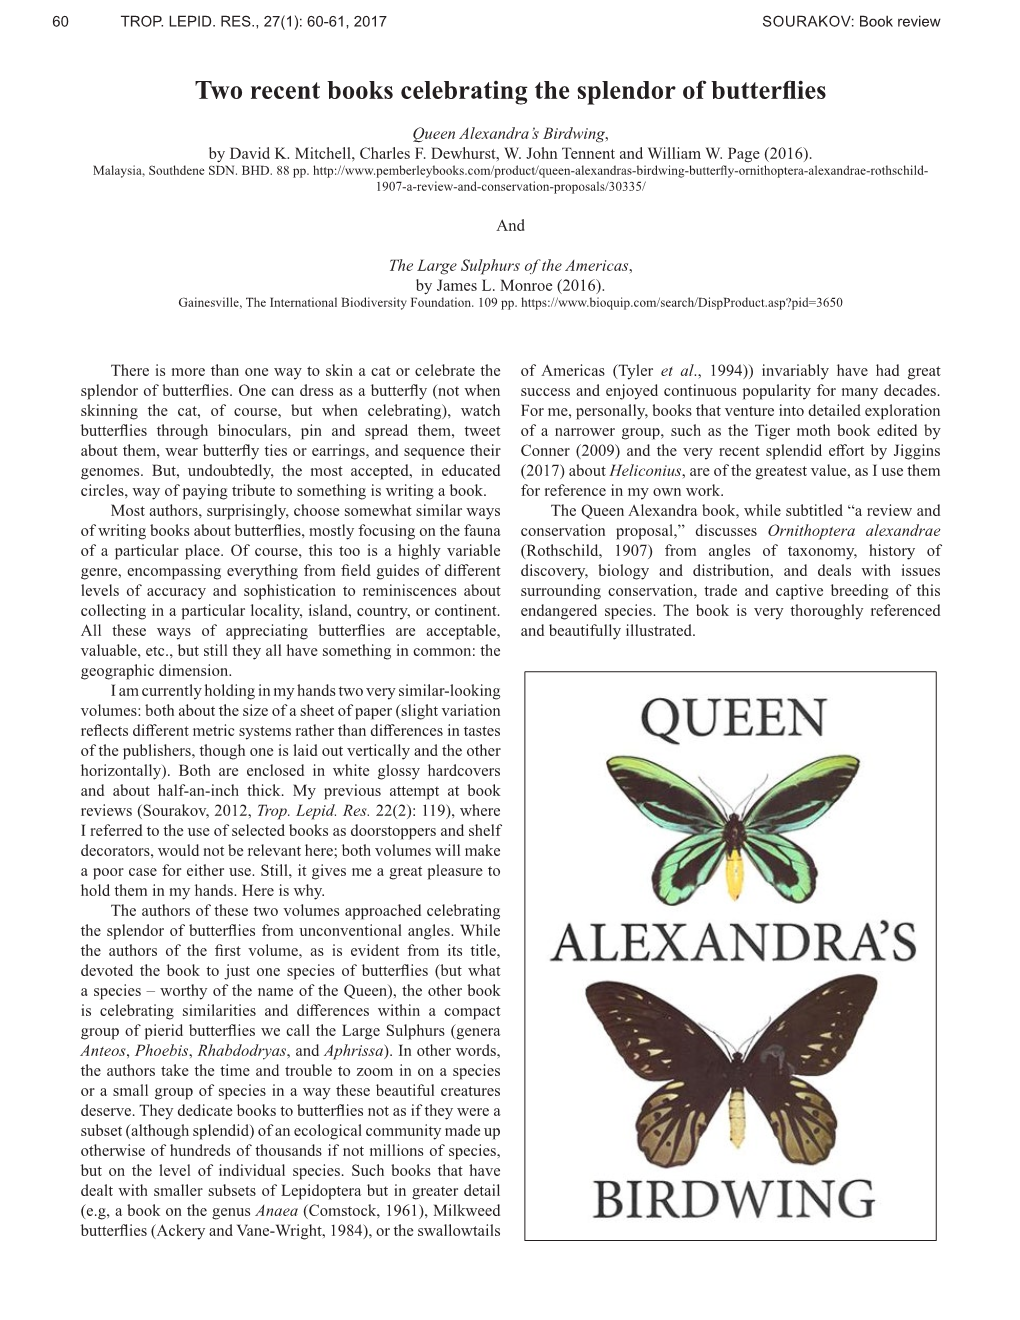 Two Recent Books Celebrating the Splendor of Butterflies